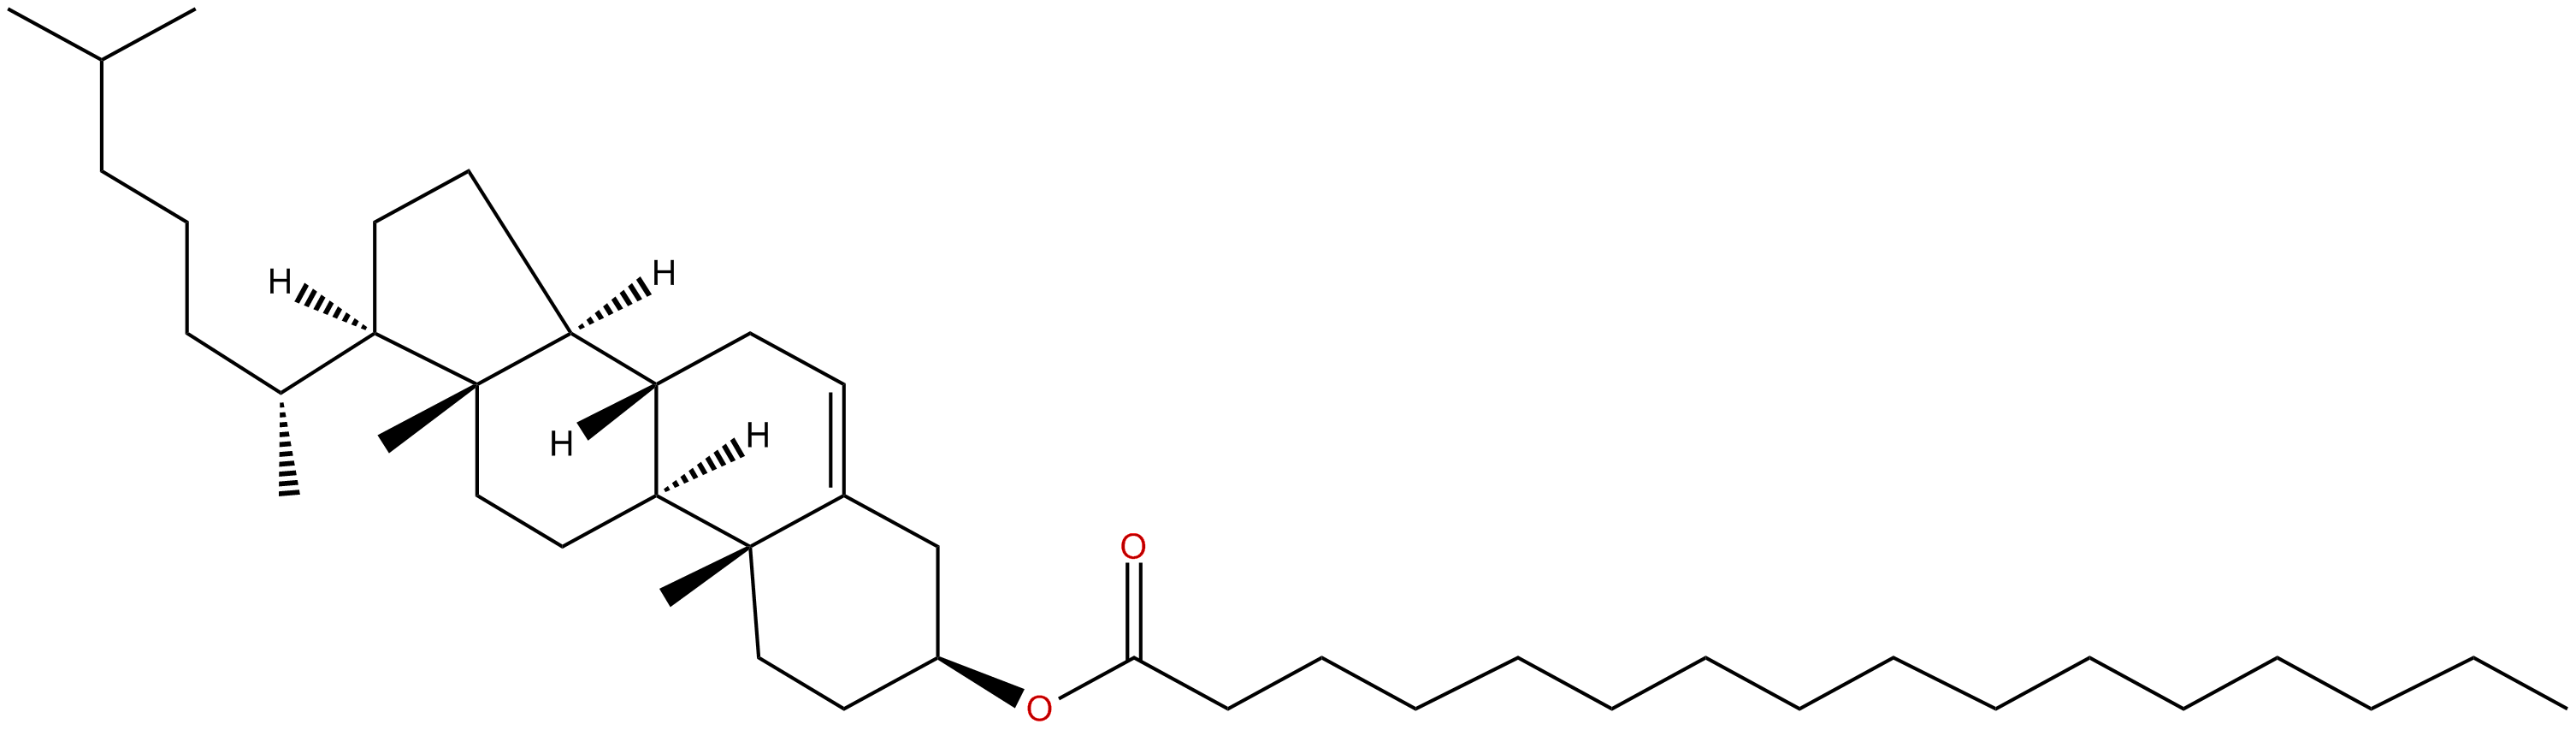 Image of (3.beta.)-cholest-5-en-3-yl hexadecanoate